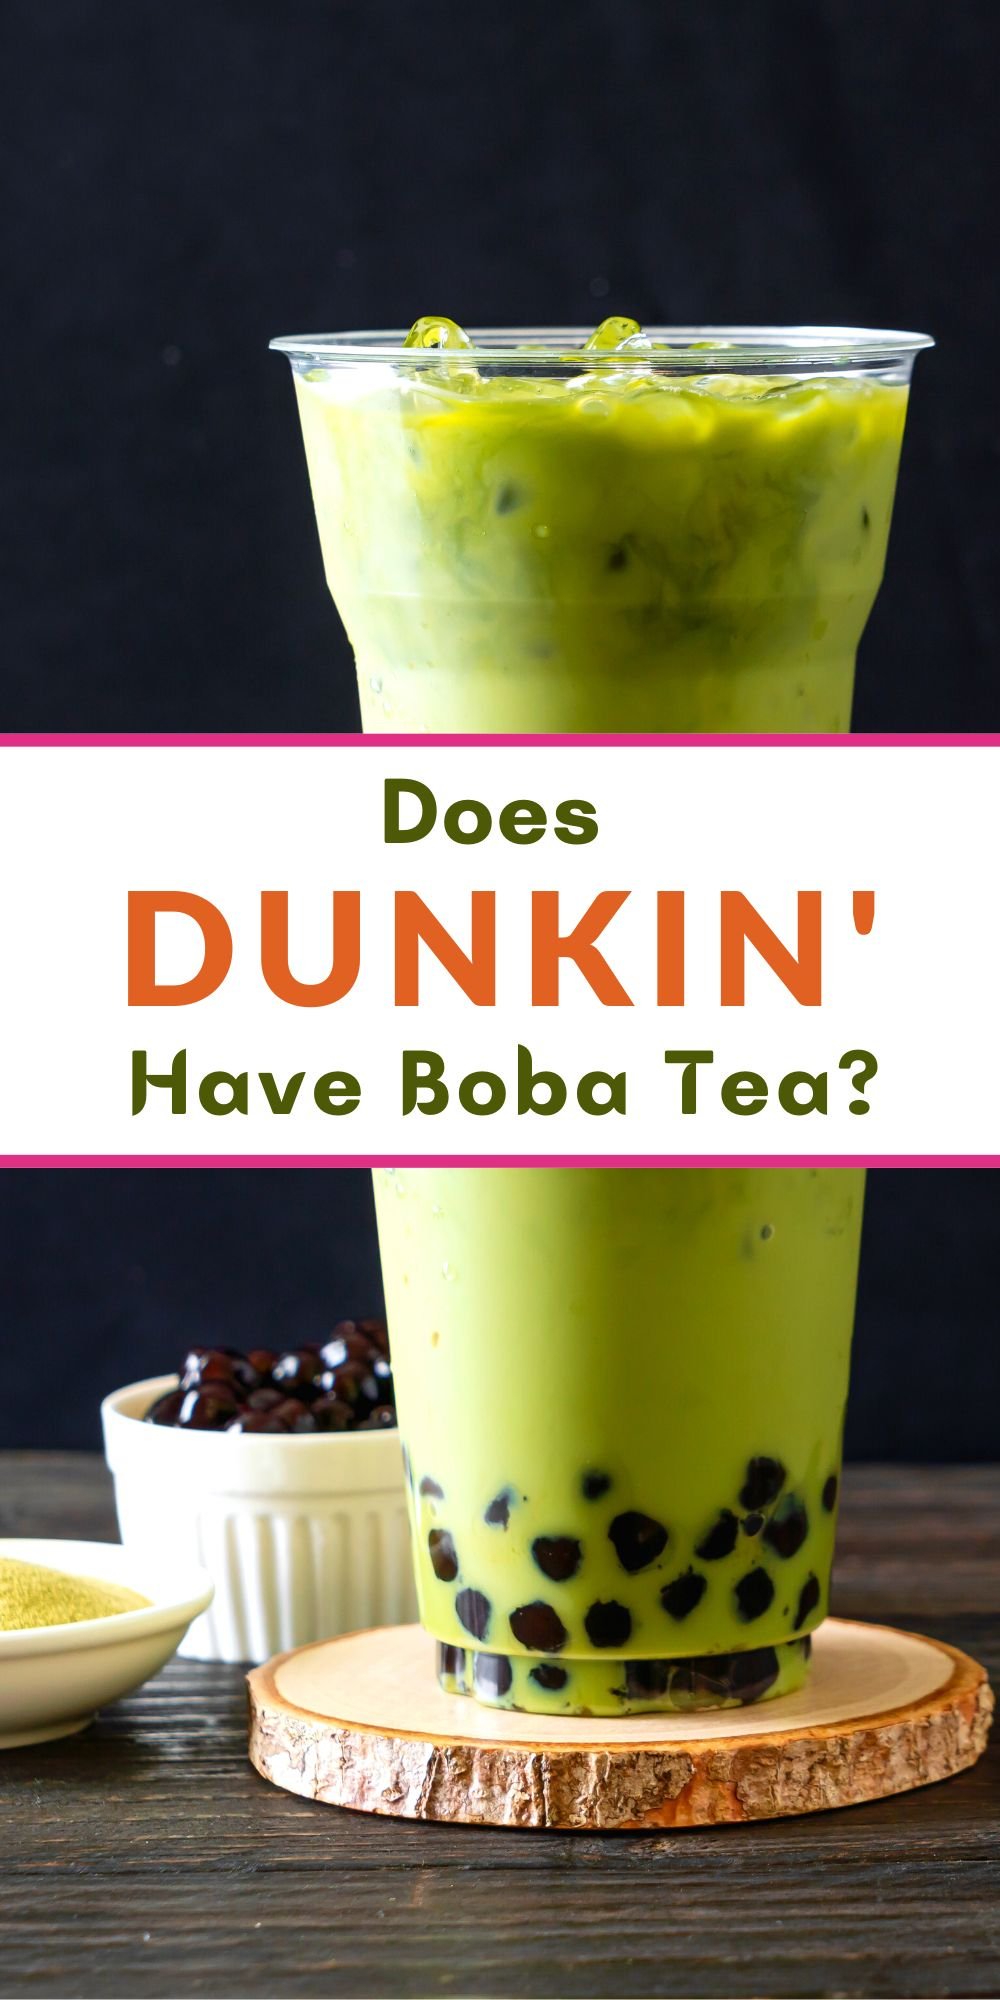 Does Dunkin' Have Boba Tea